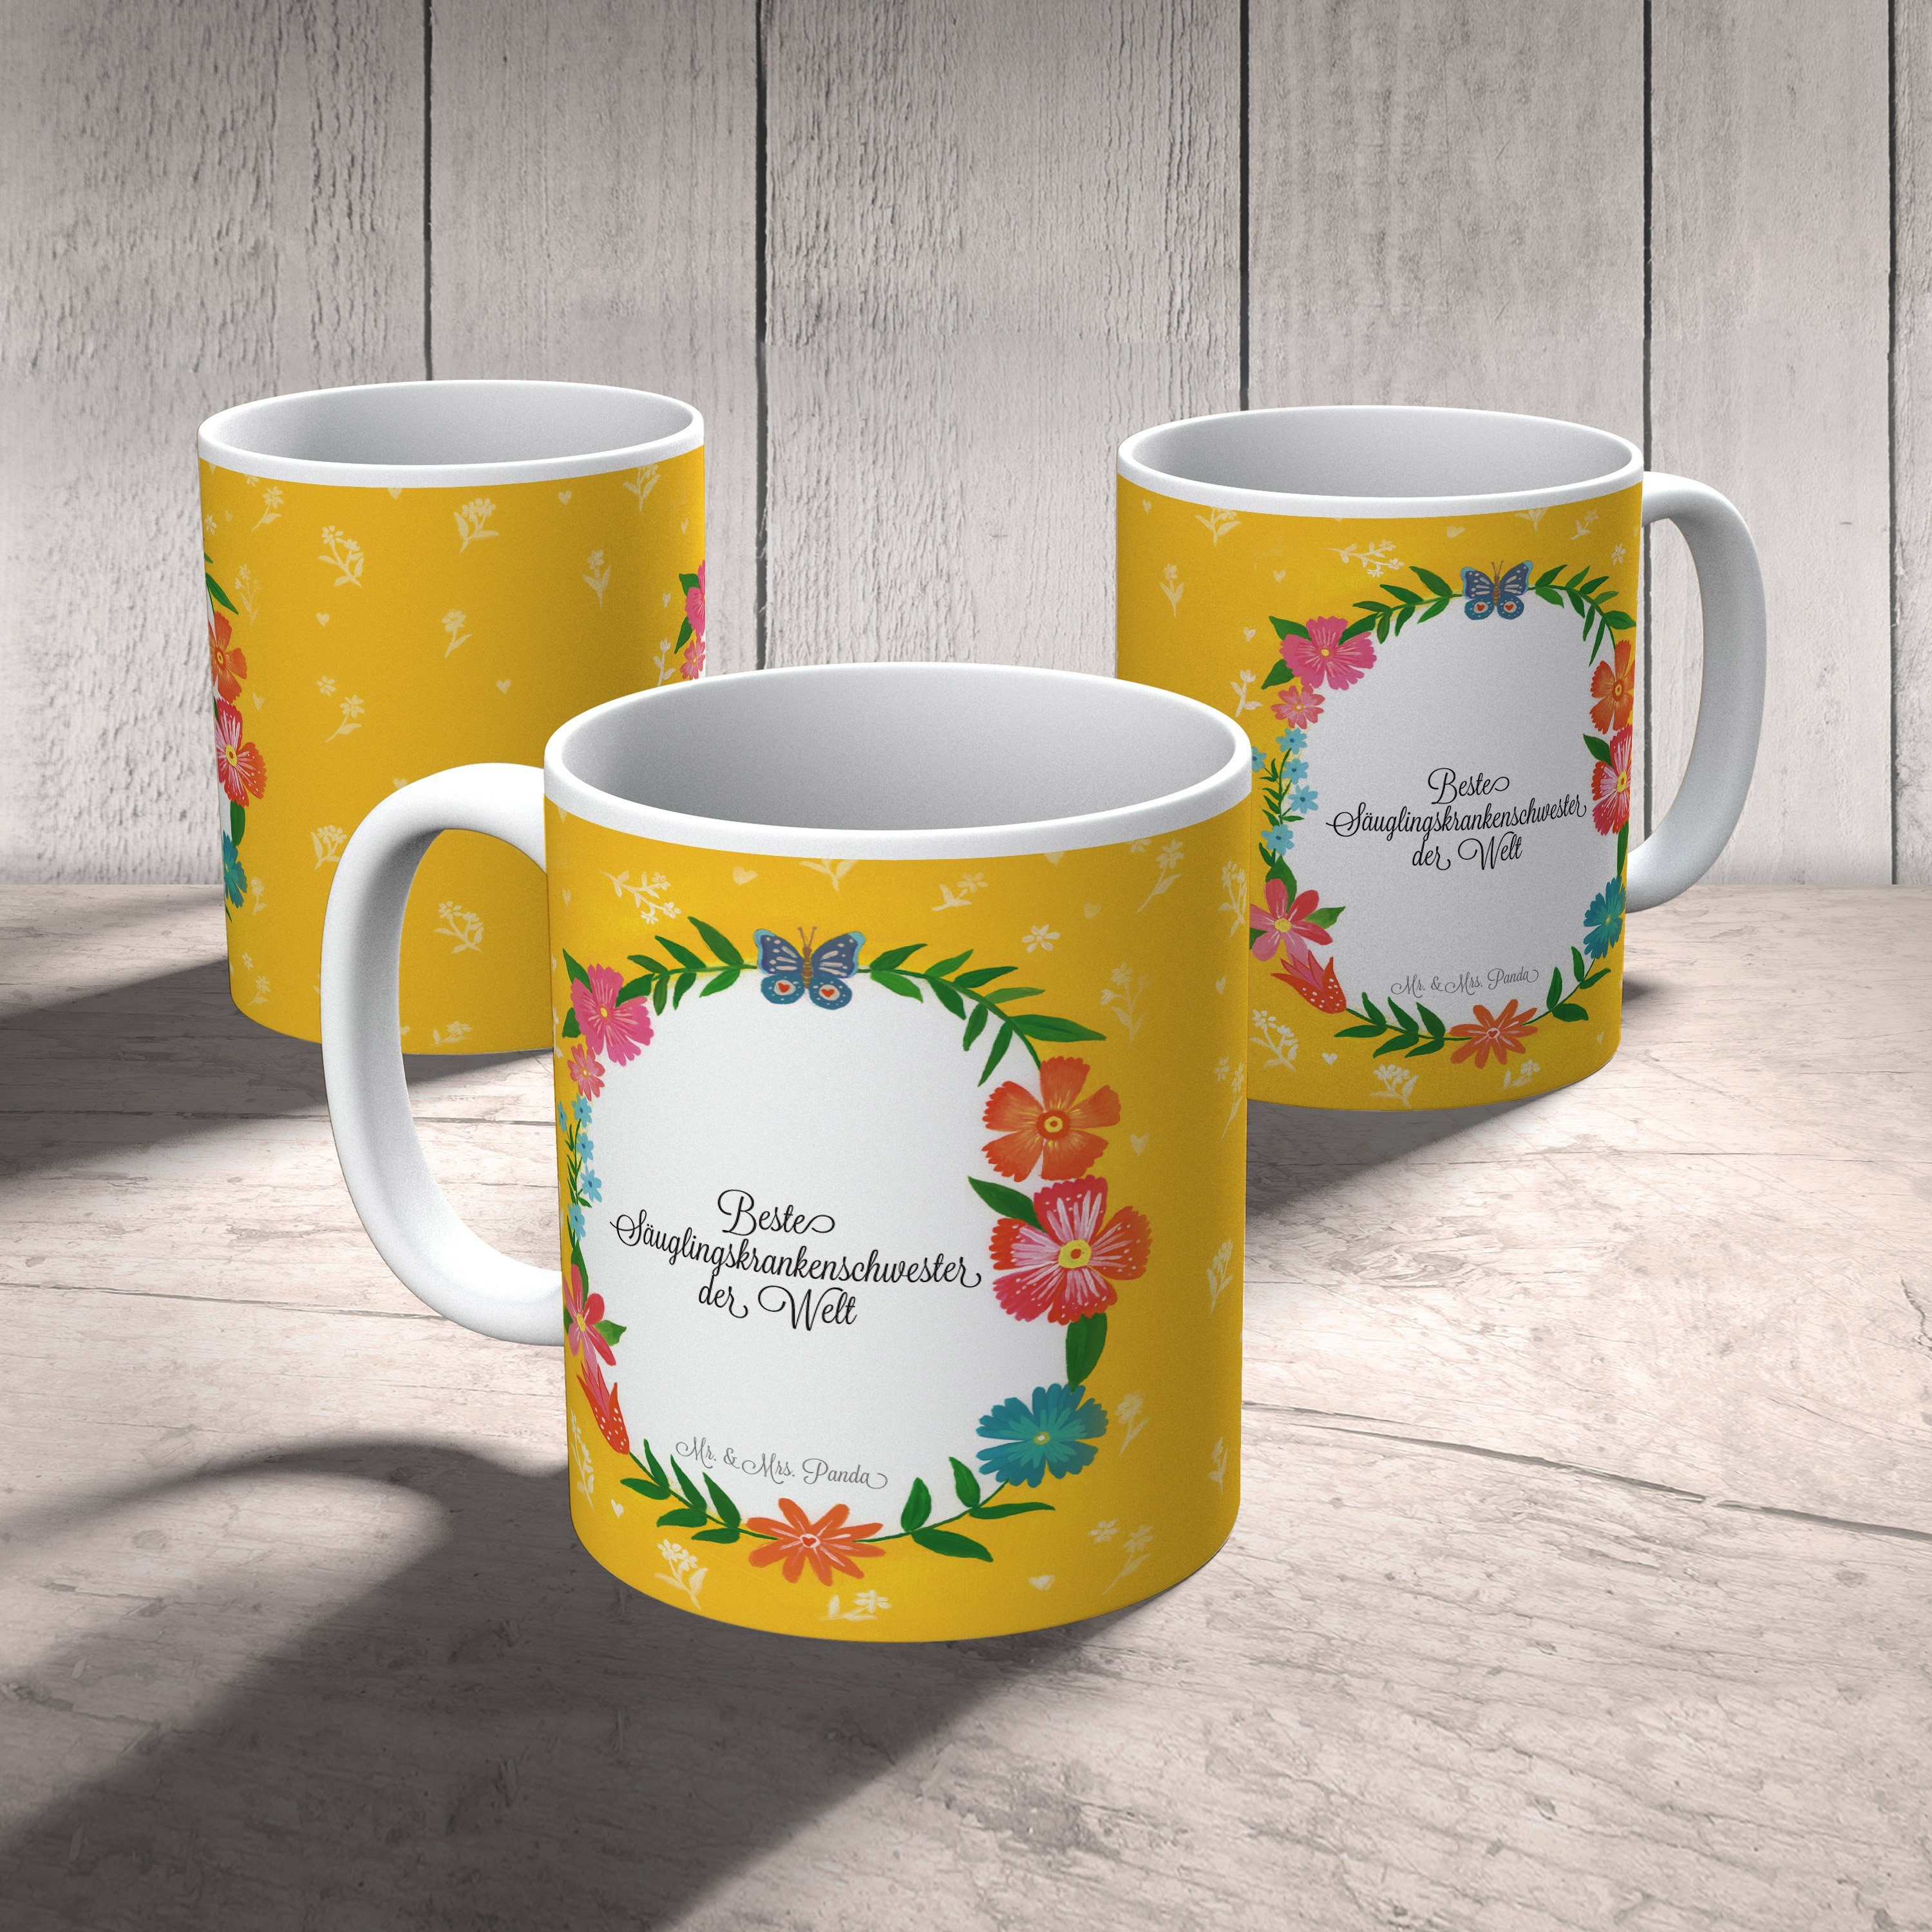 Mr. & Mrs. Panda Tasse Kaffeetasse, Säuglingskrankenschwester Tasse - Motiv, Keramik Beruf, Geschenk